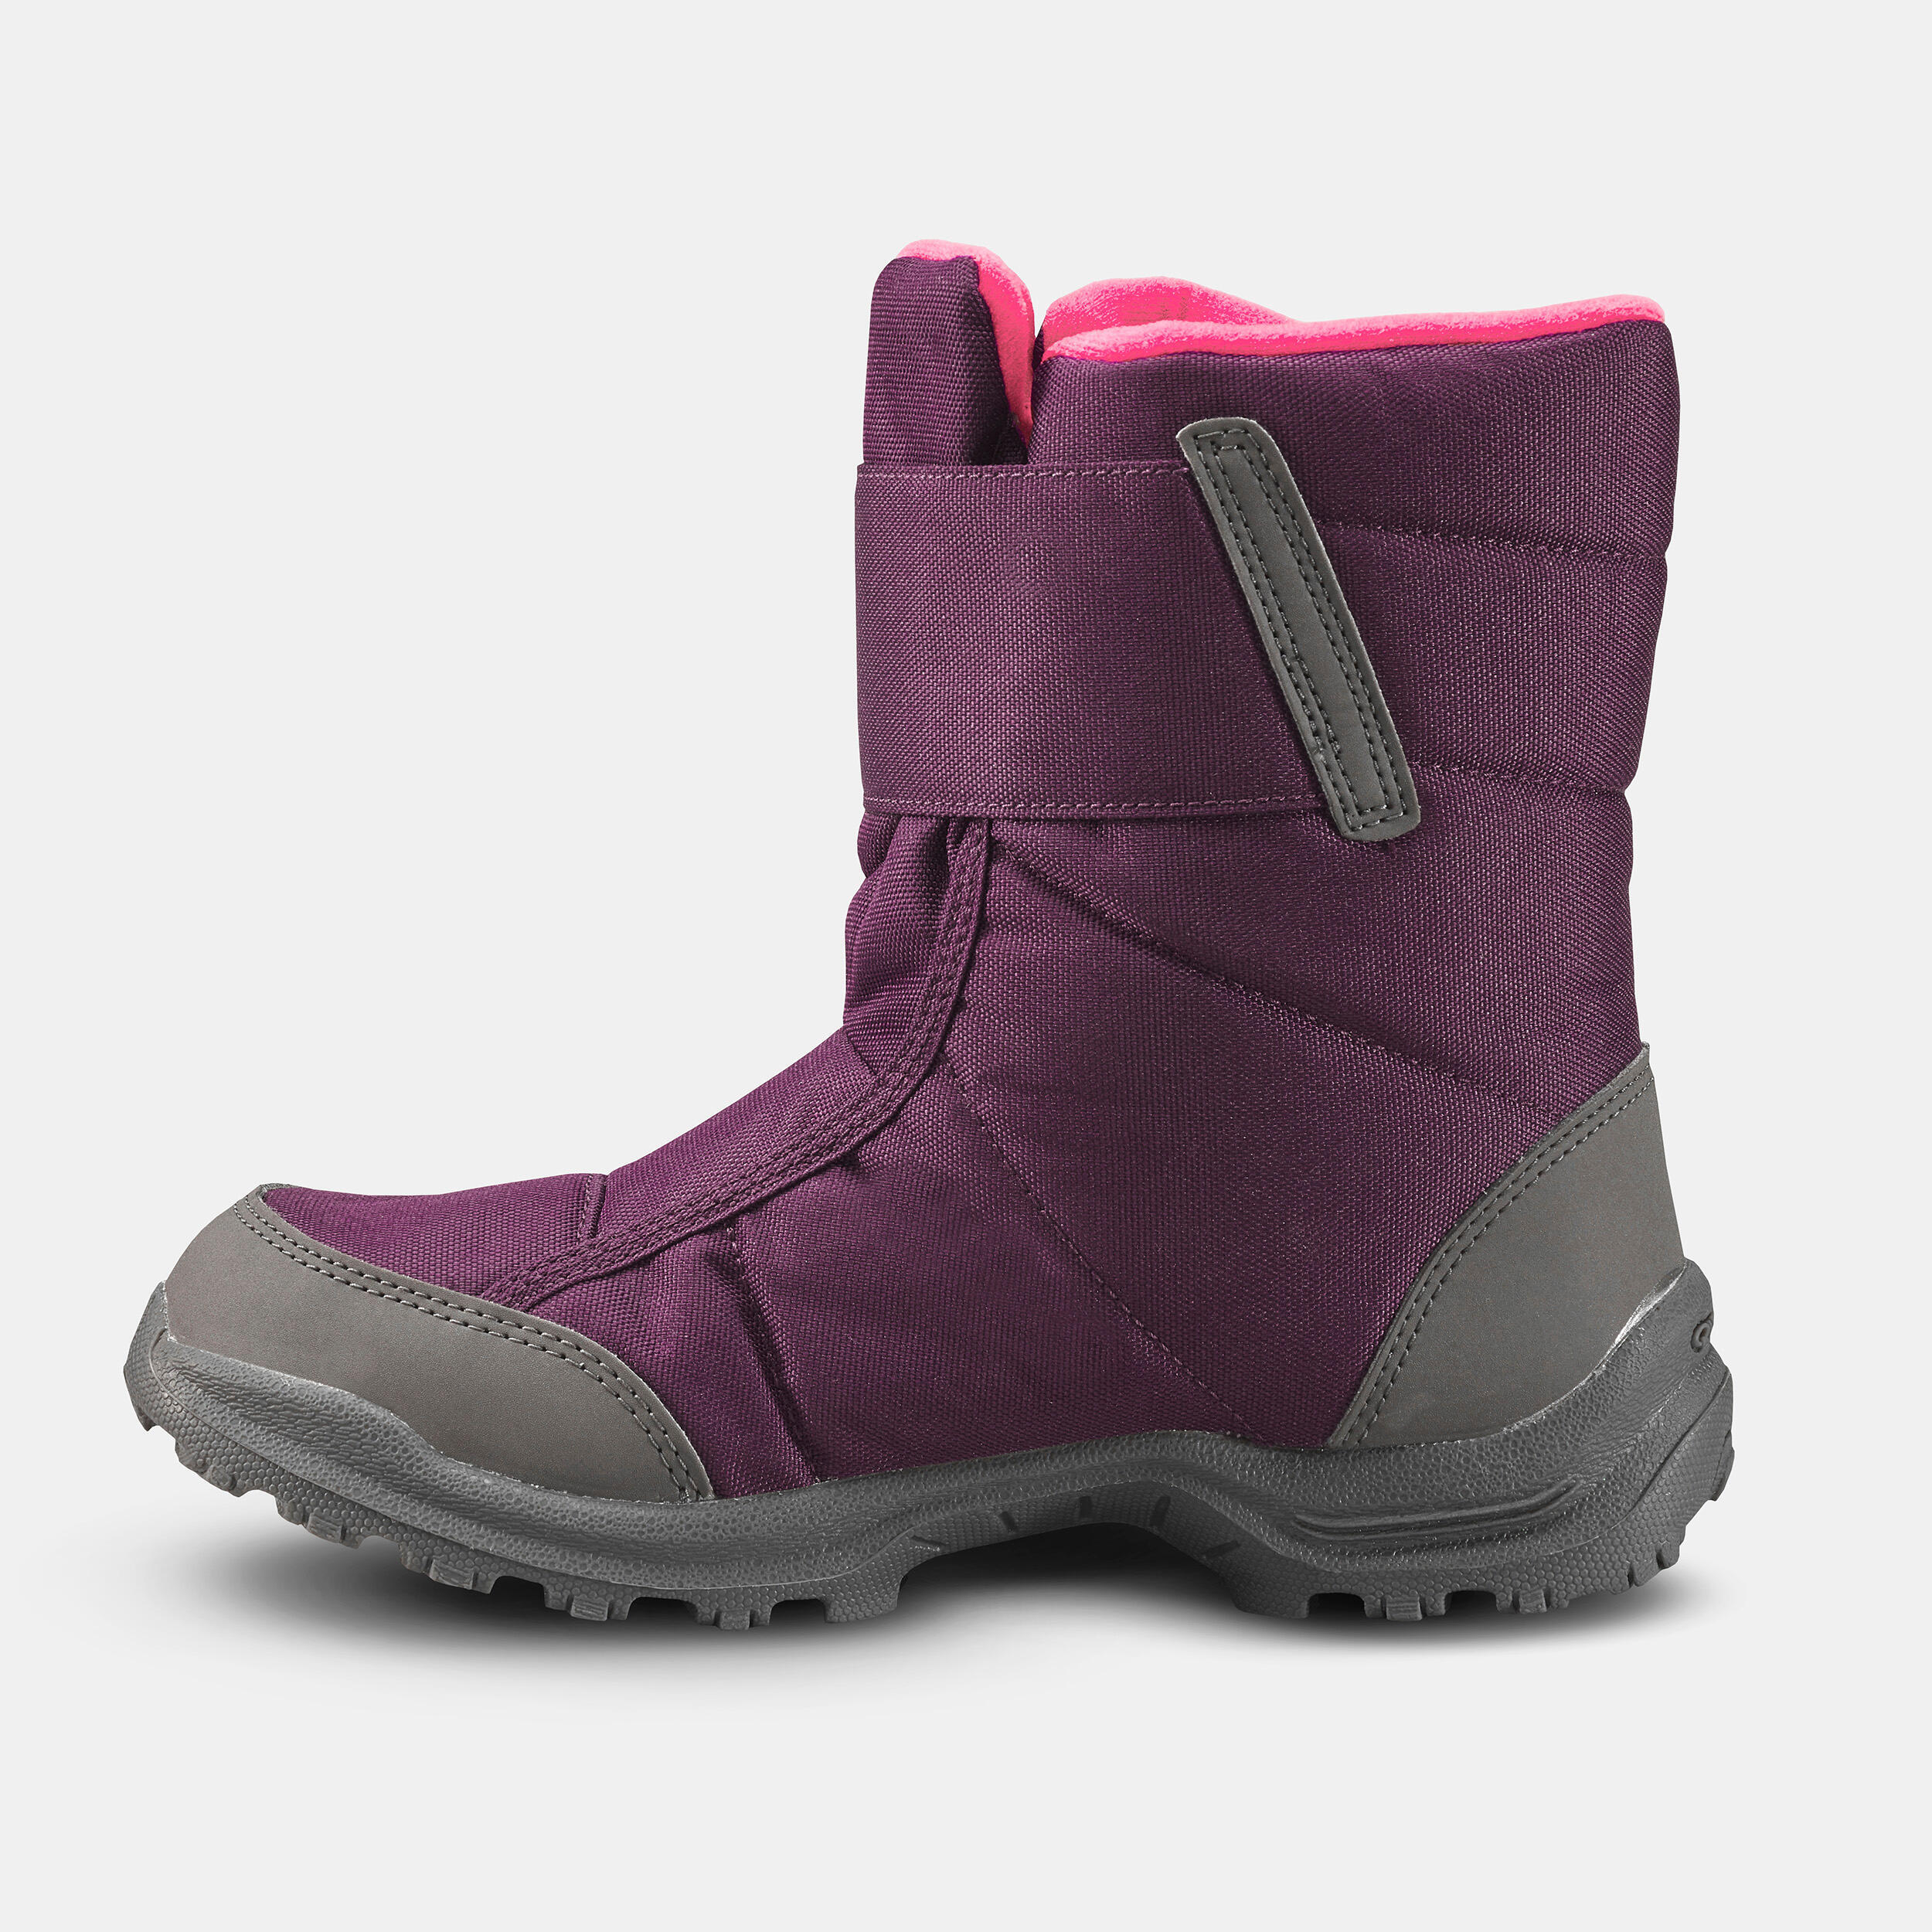 Kids’ warm waterproof snow hiking boots SH100 - Velcro Size 7 - 5.5  5/7